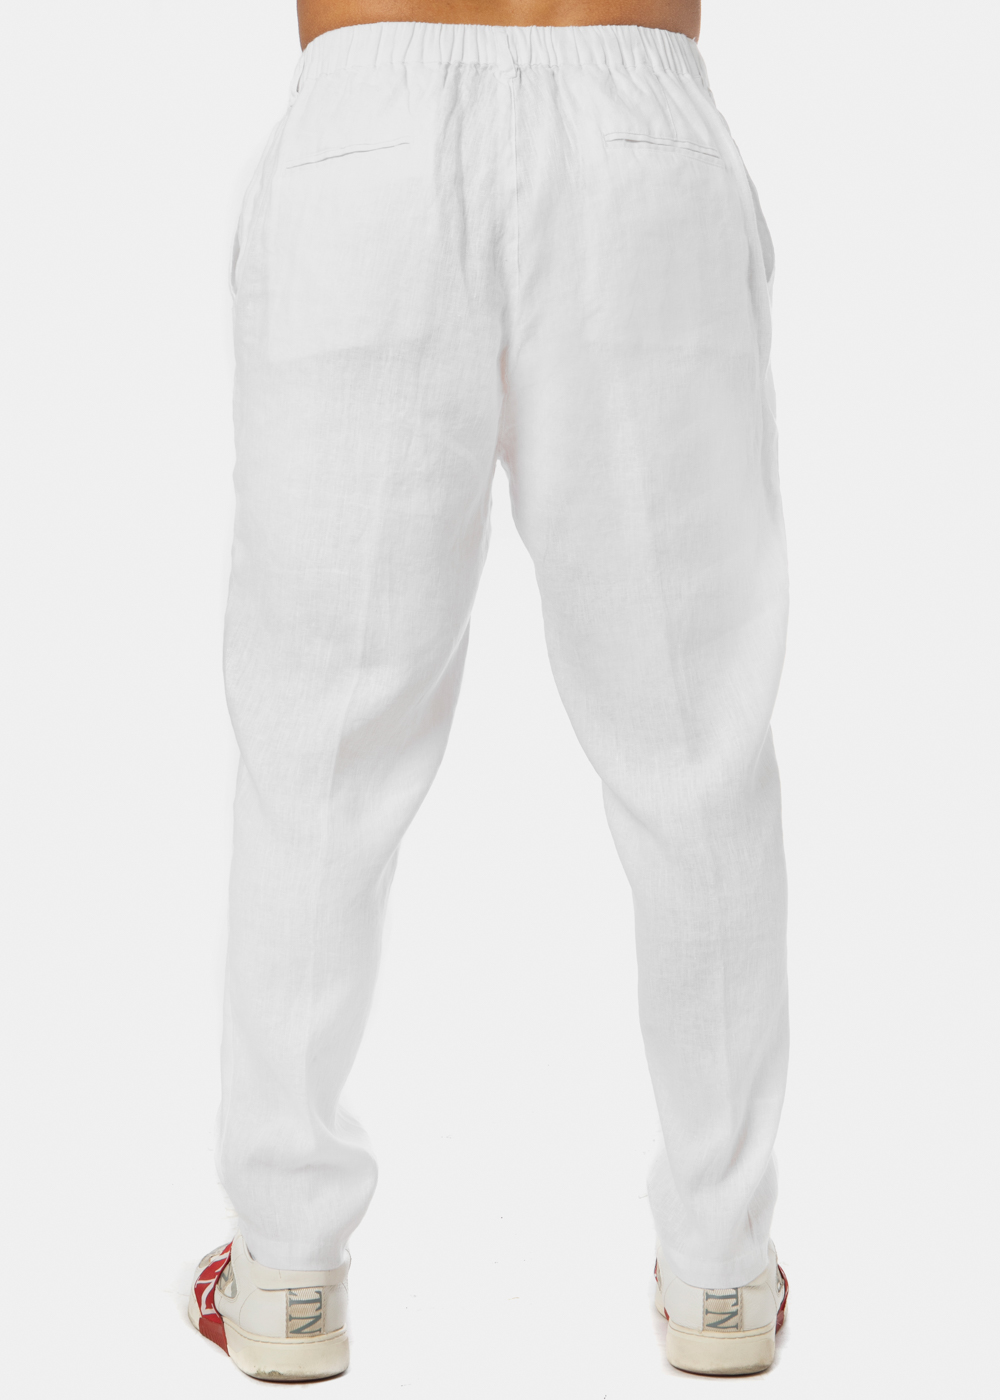 100% Linen White Long Pants